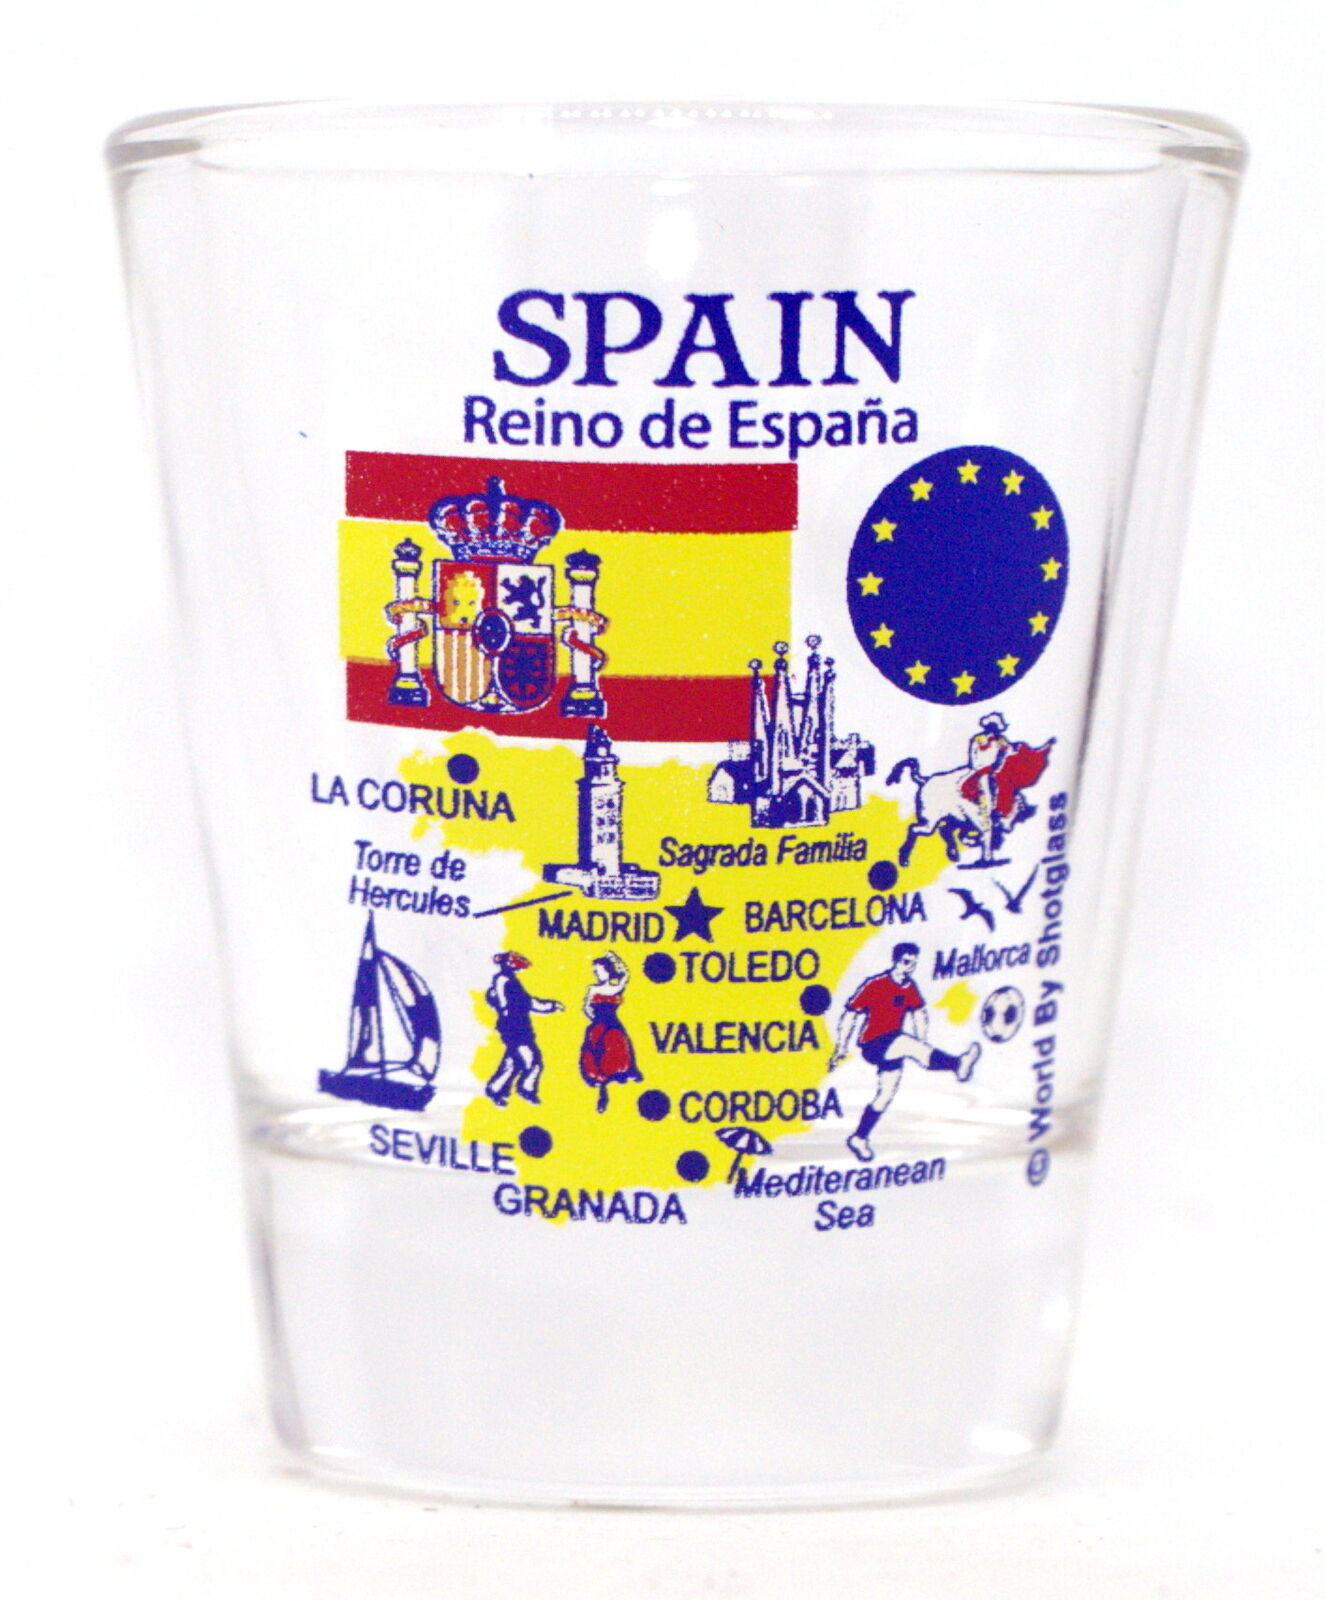 SPAIN EU SERIES LANDMARKS AND ICONS COLLAGE SHOT GLASS SHOTGLASS